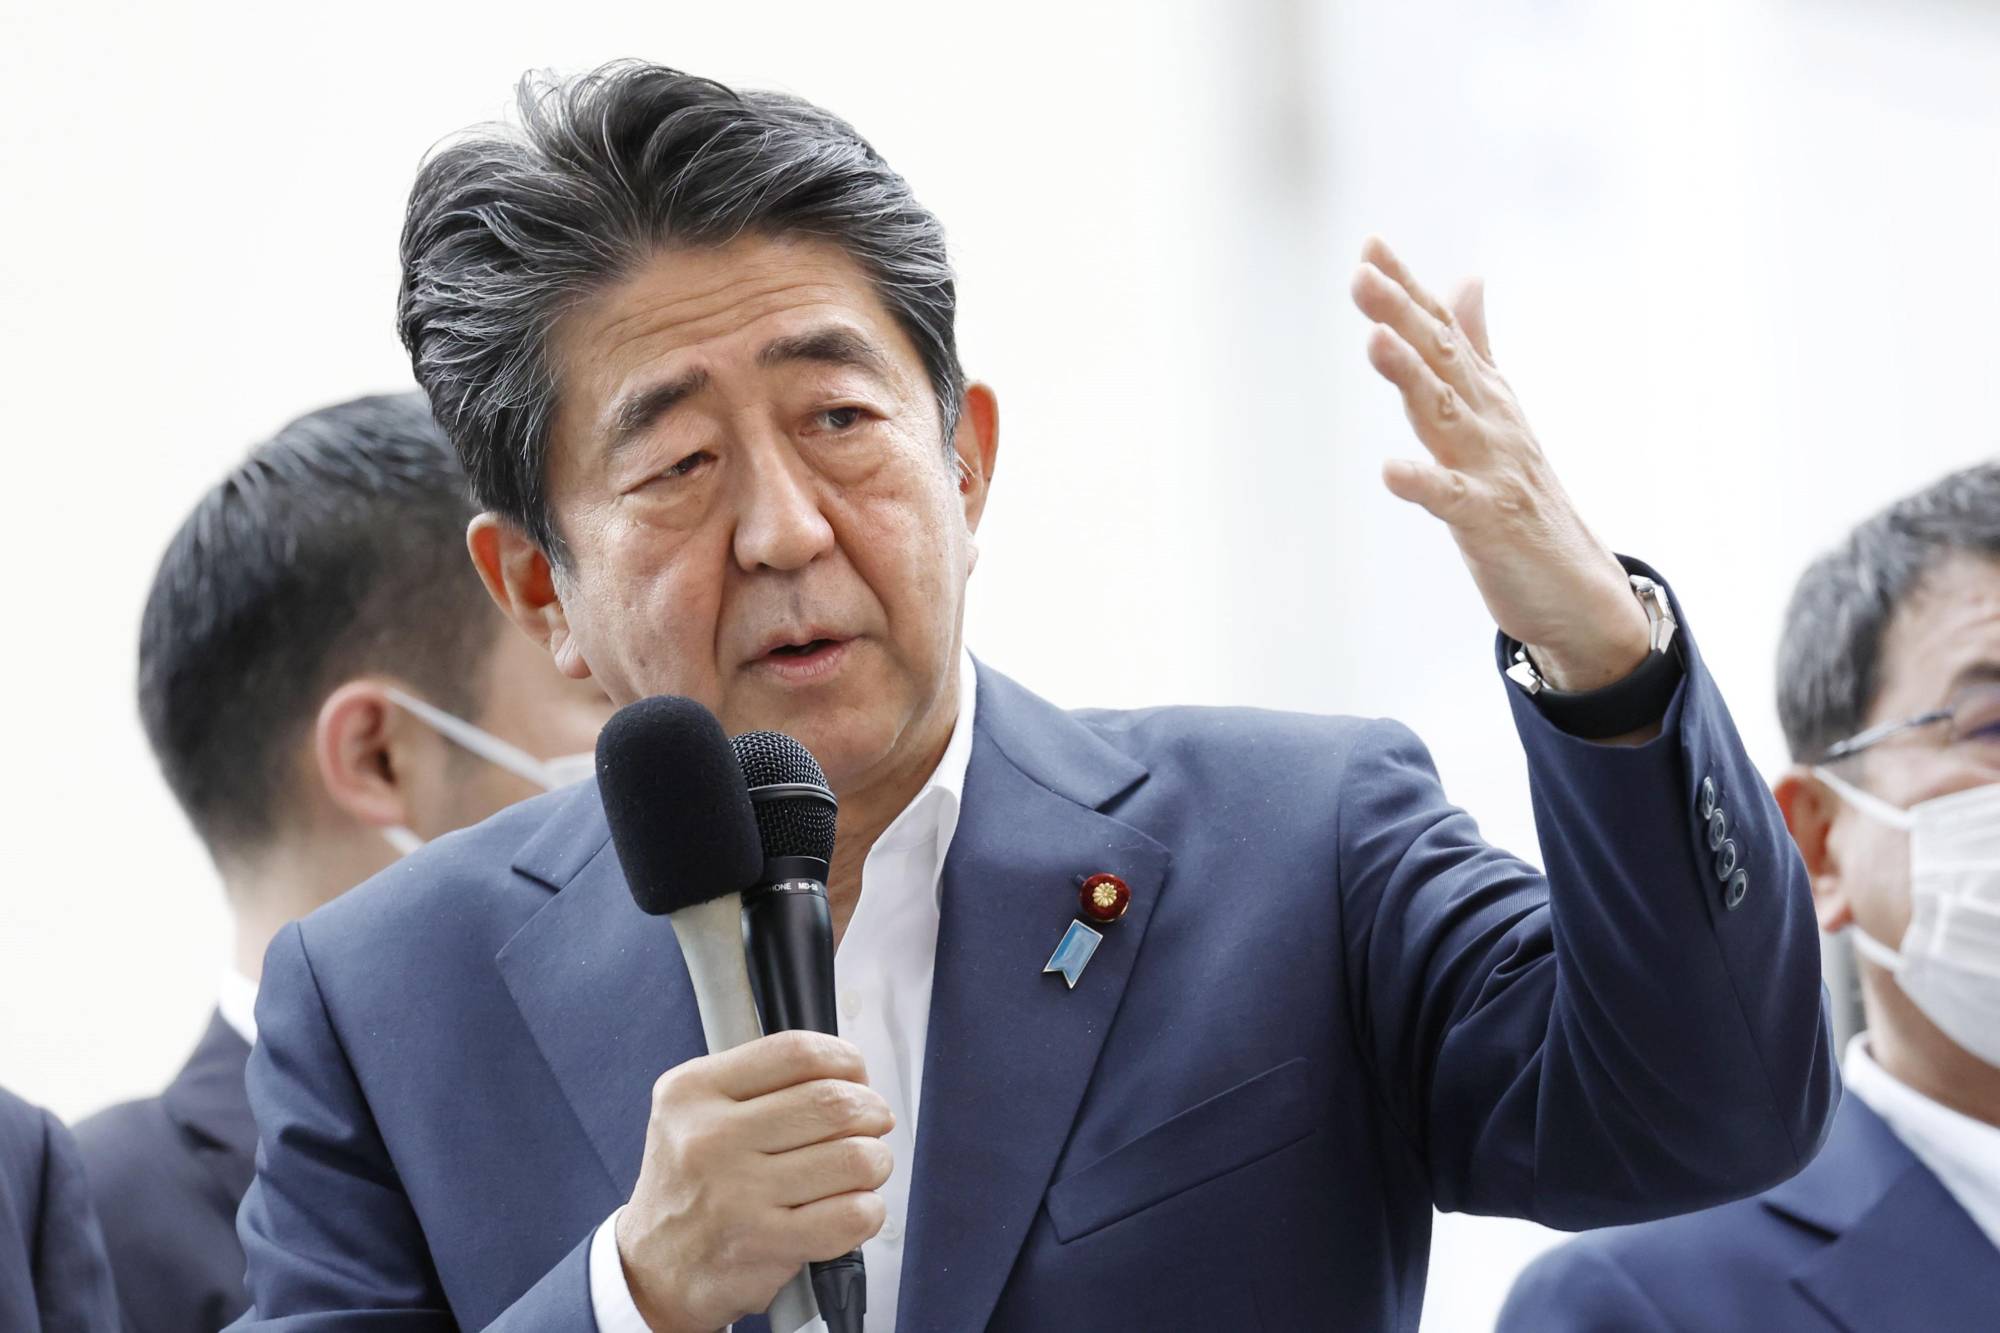 Shinzo Abe, Campaign rally, shot, died